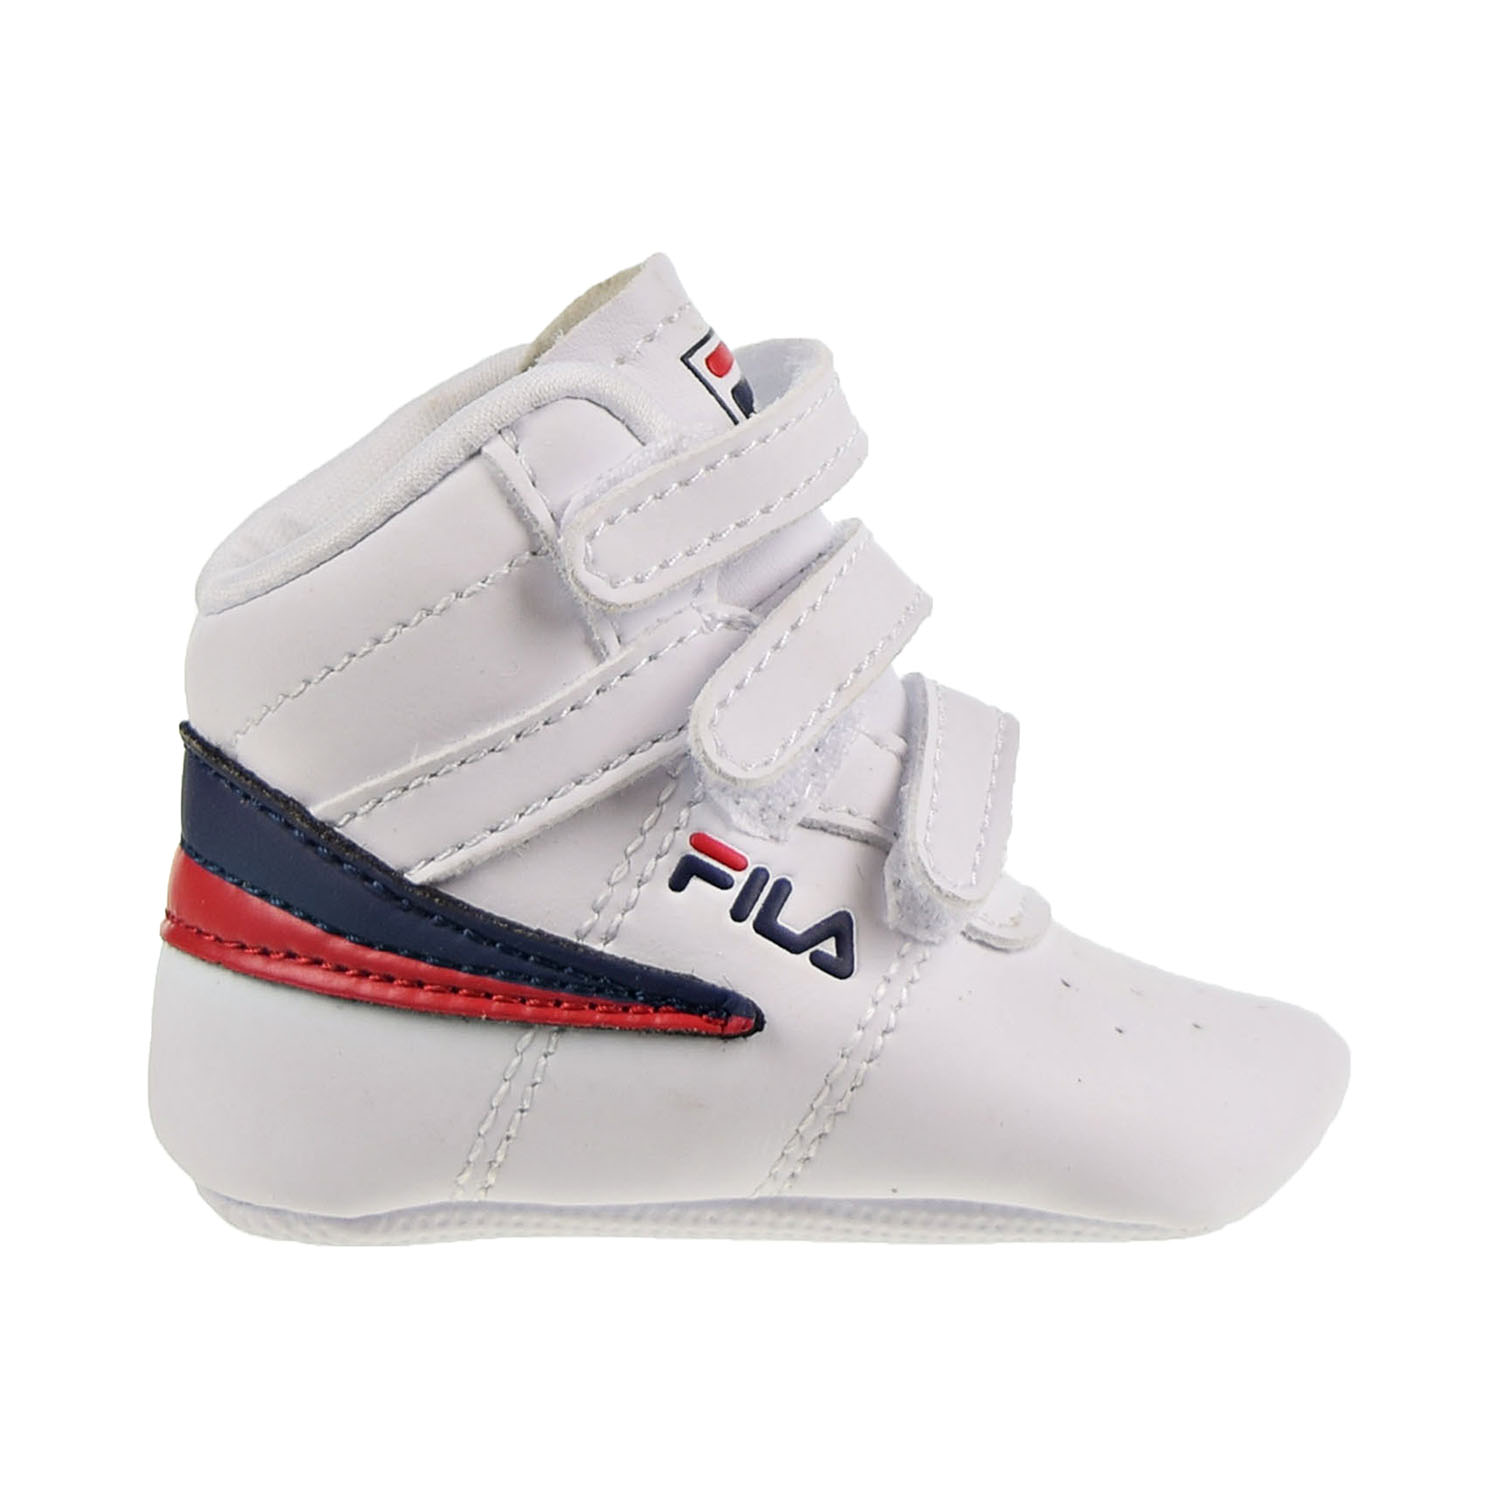 Fila Crib F-13 Kids' Shoes White/Navy/Red 7fm00613-125 - image 1 of 6